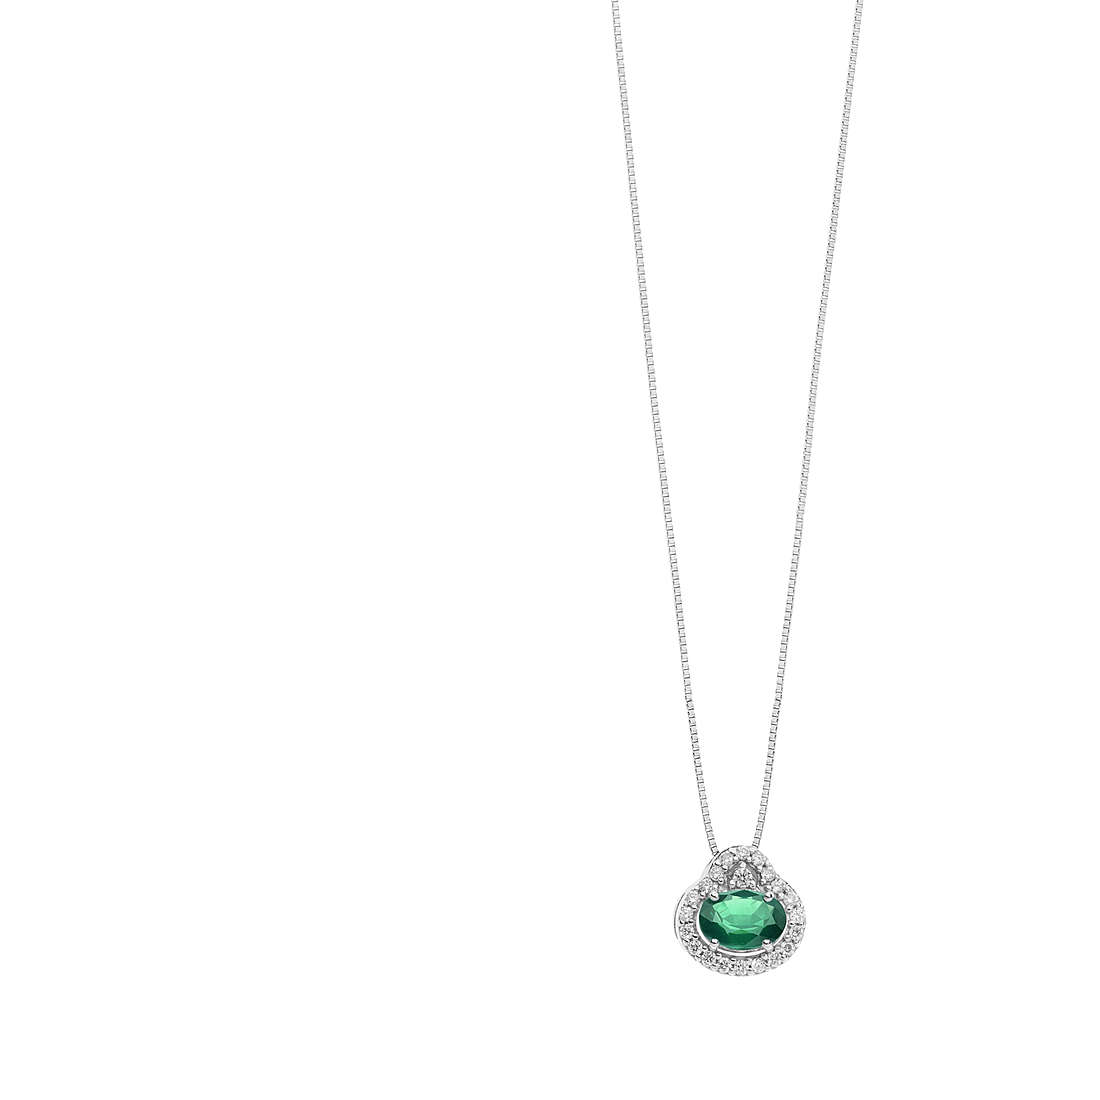 Orion GLB 1480 Women's Jewelry Necklace